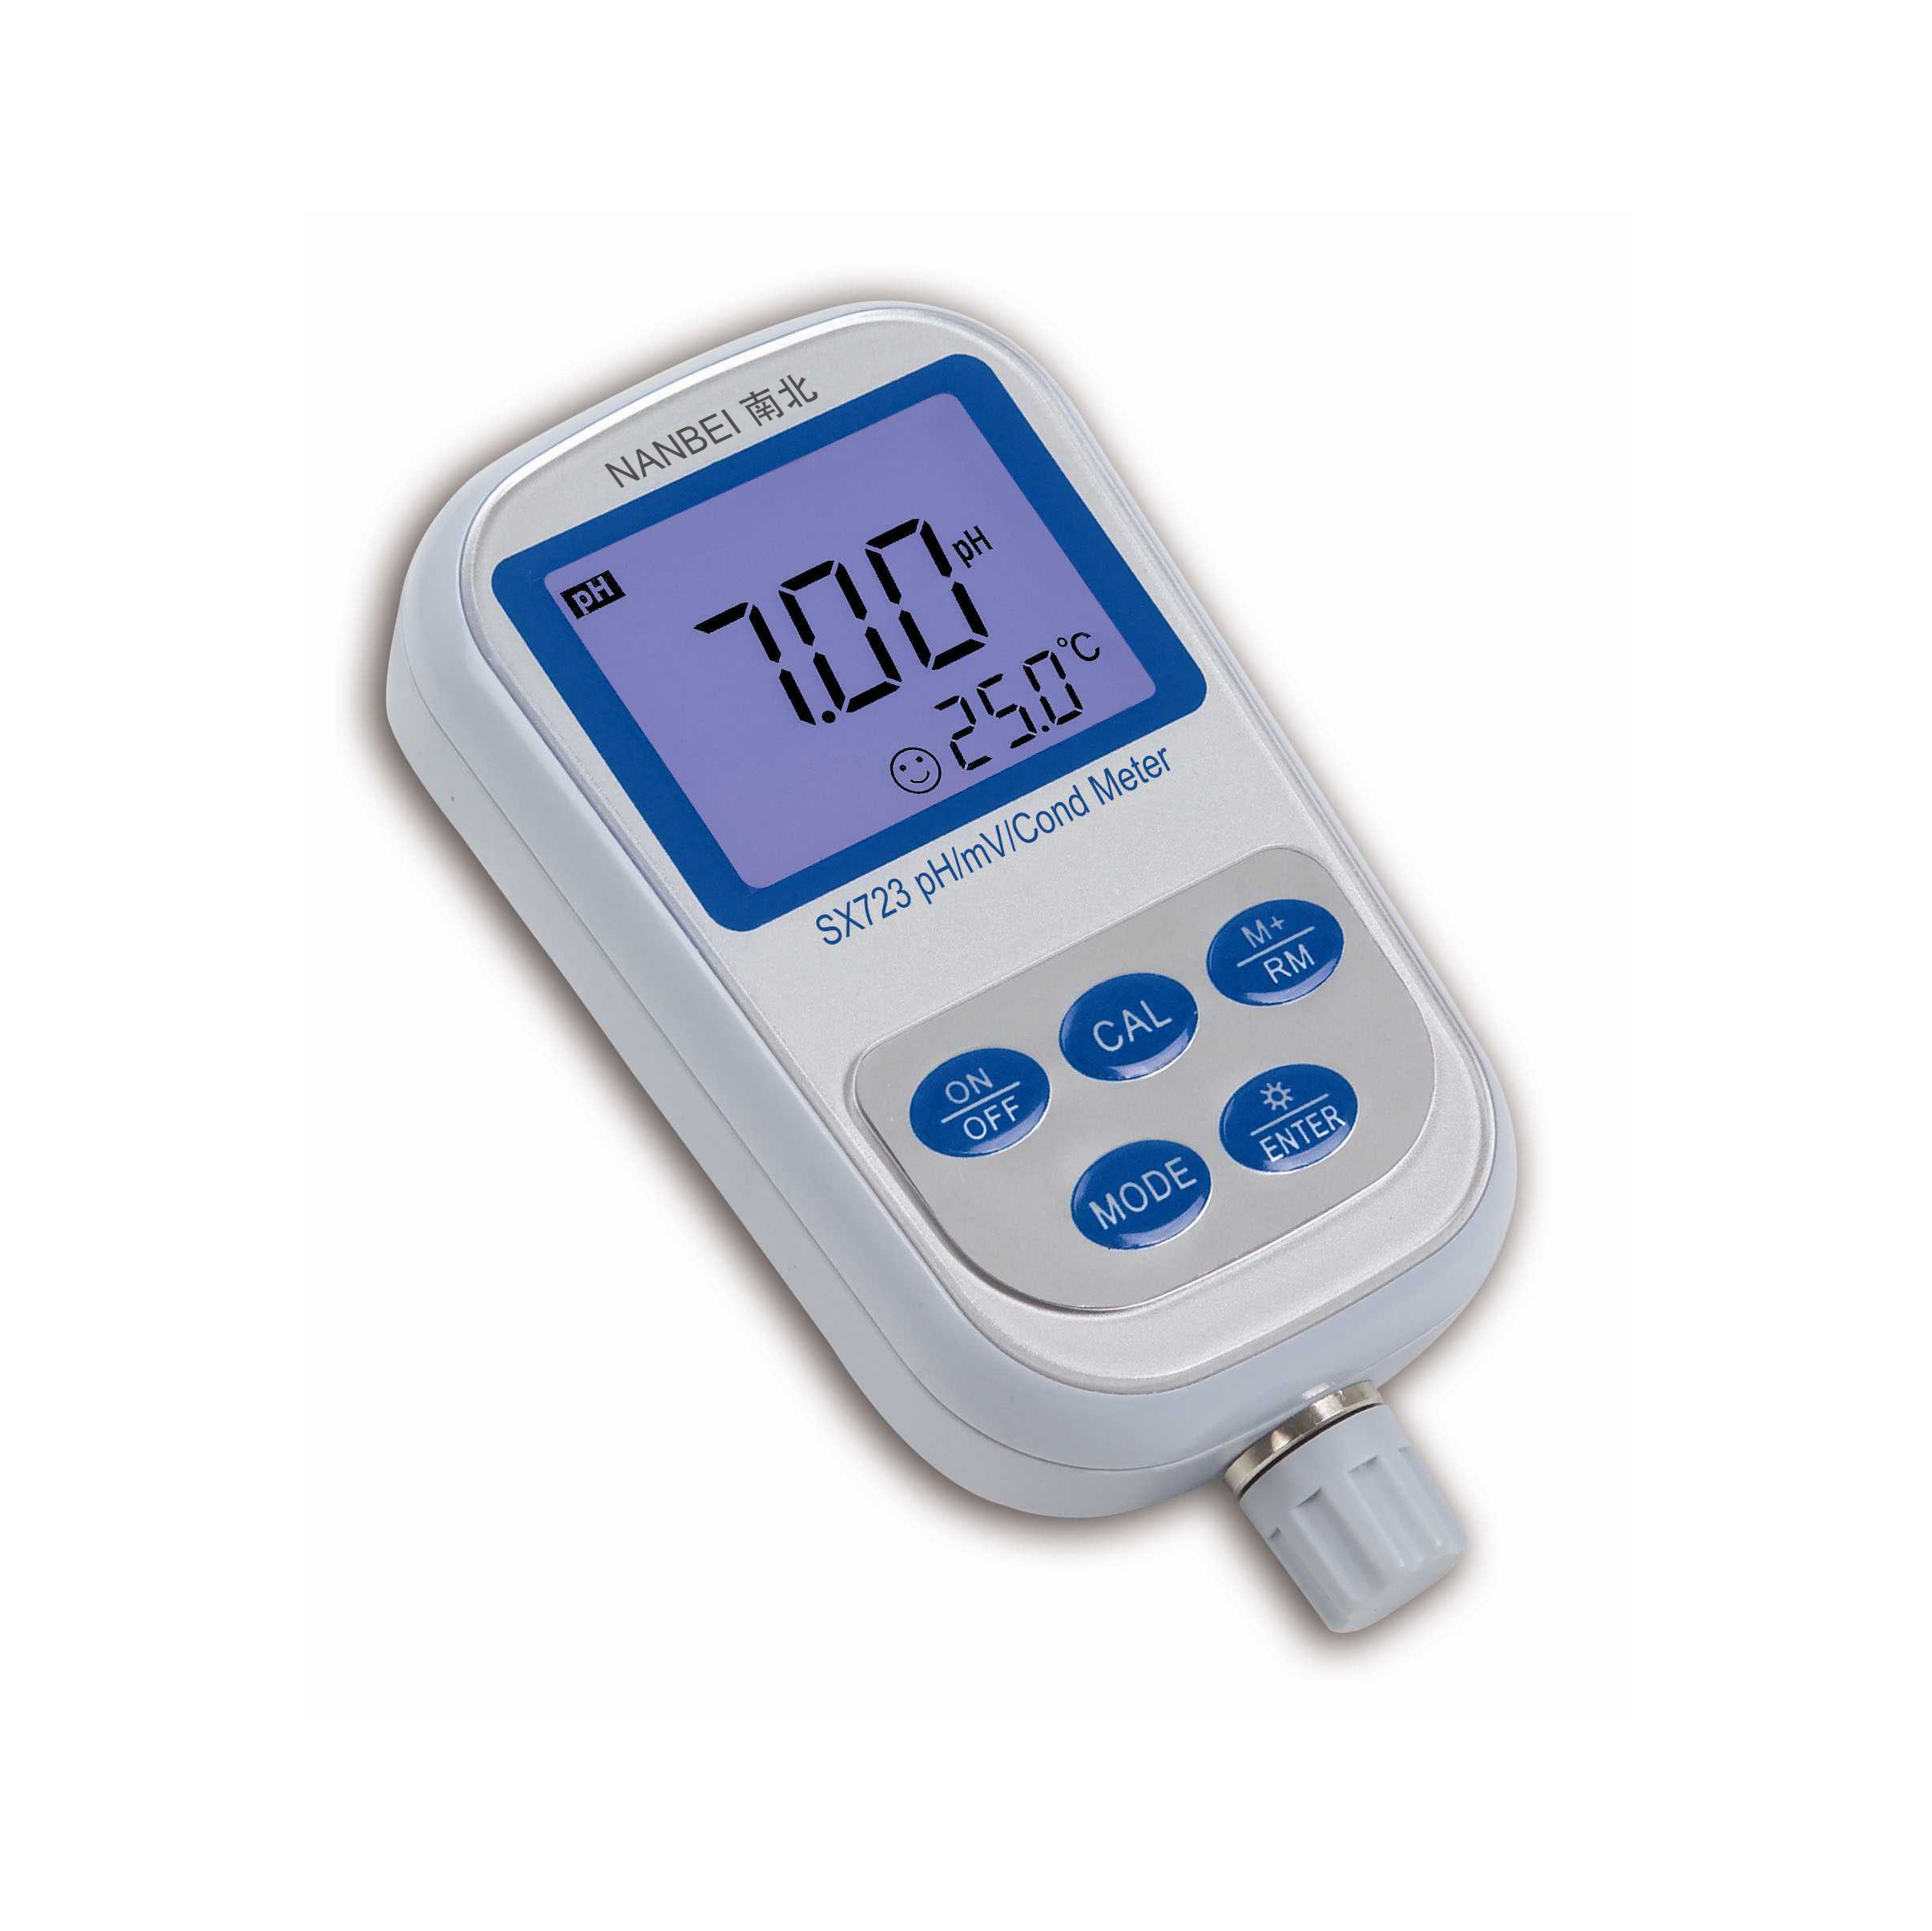 SX725 Portable pH / Dissolved Oxygen Meter